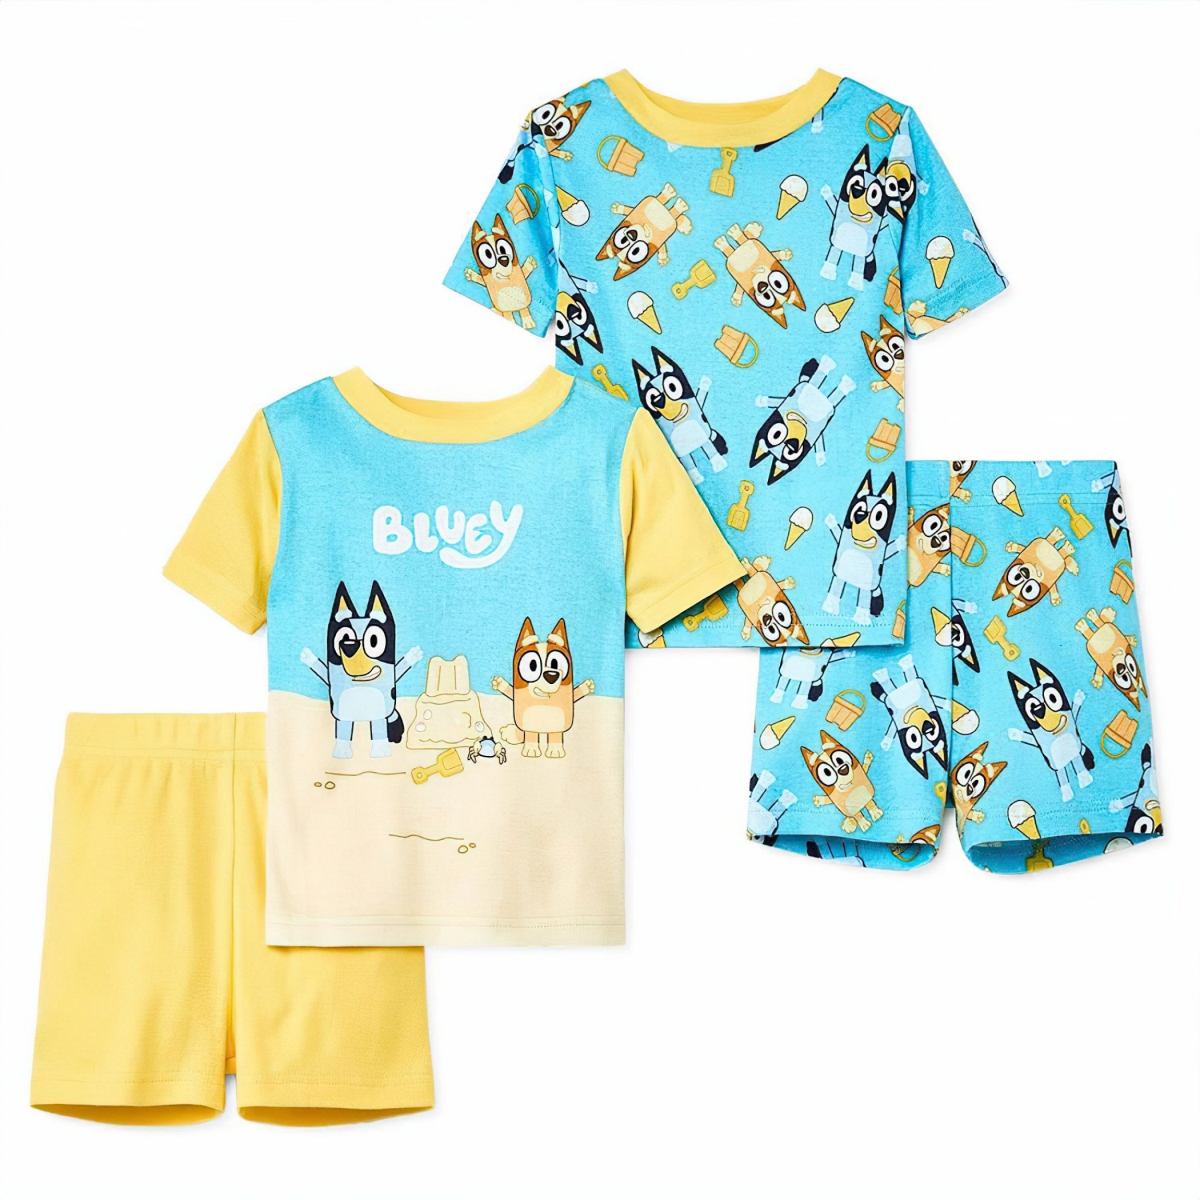 Picture of Bluey 873075-toddler2t Bluey Sand Castles Toddler Pajama Set - Toddler 2T - 4 Piece